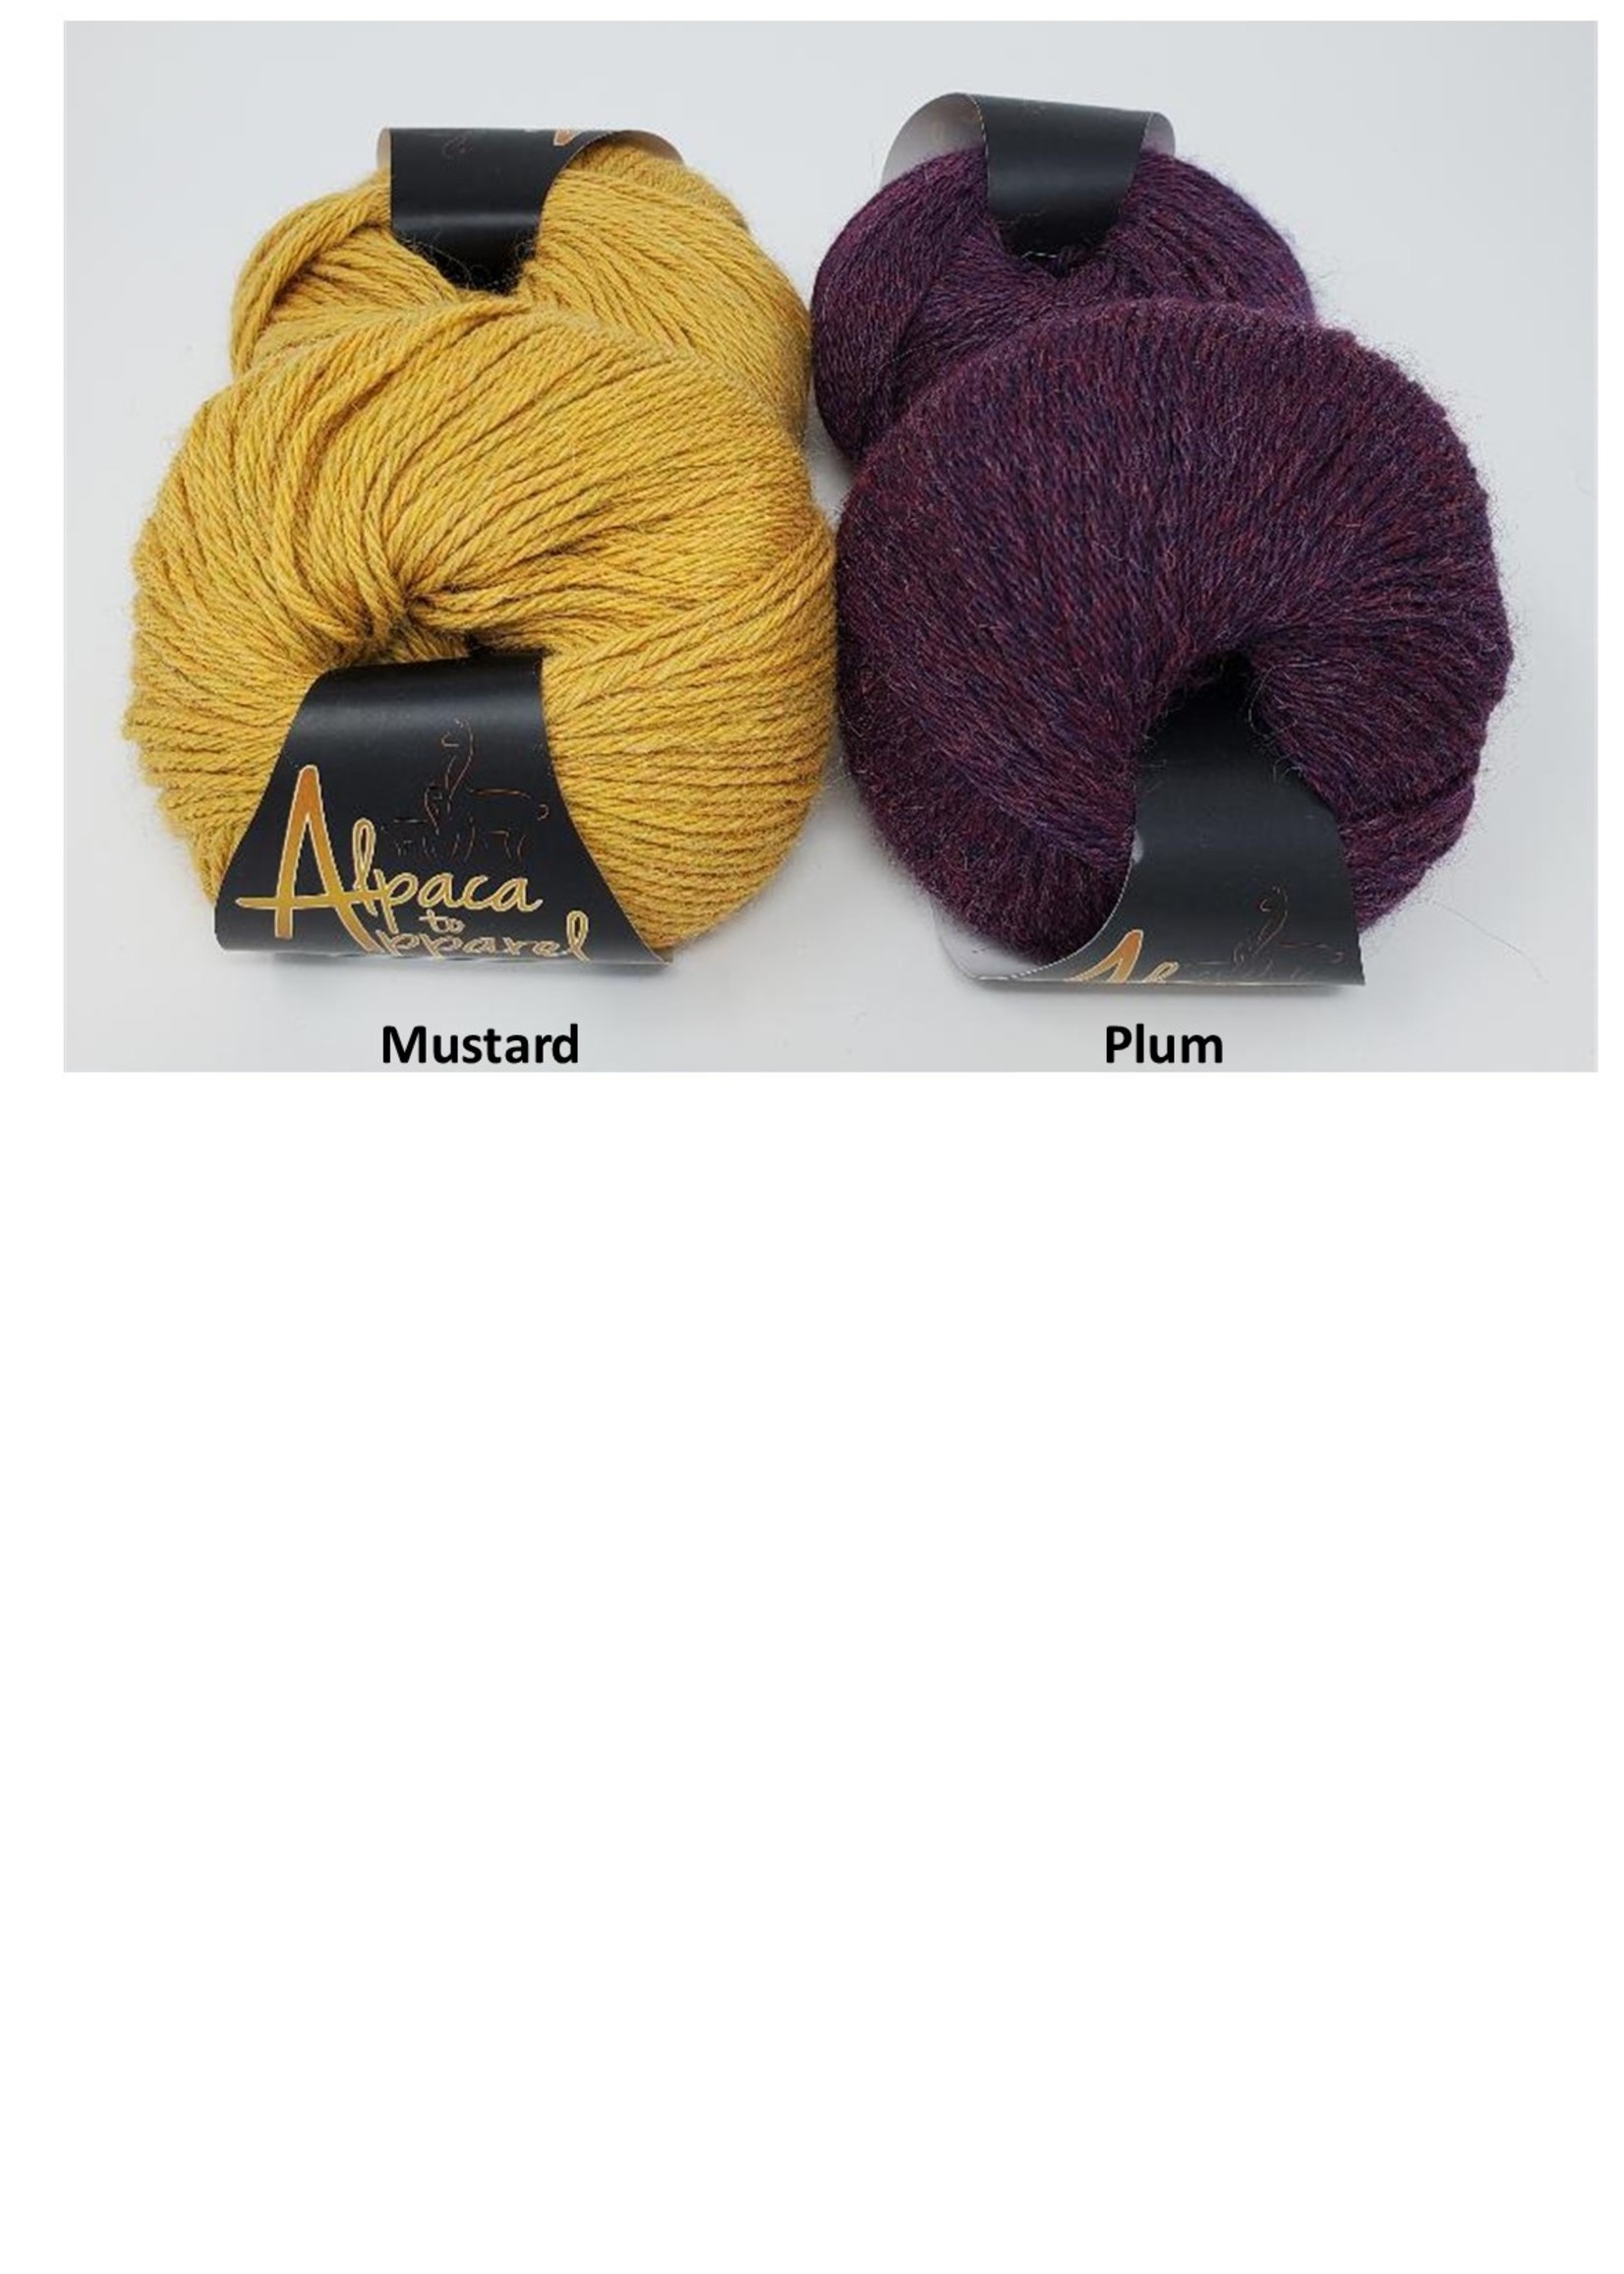 DK weight, soft baby alpaca yarn for hand knitting, crochet, weaving. —  Lancaster Yarn Shop